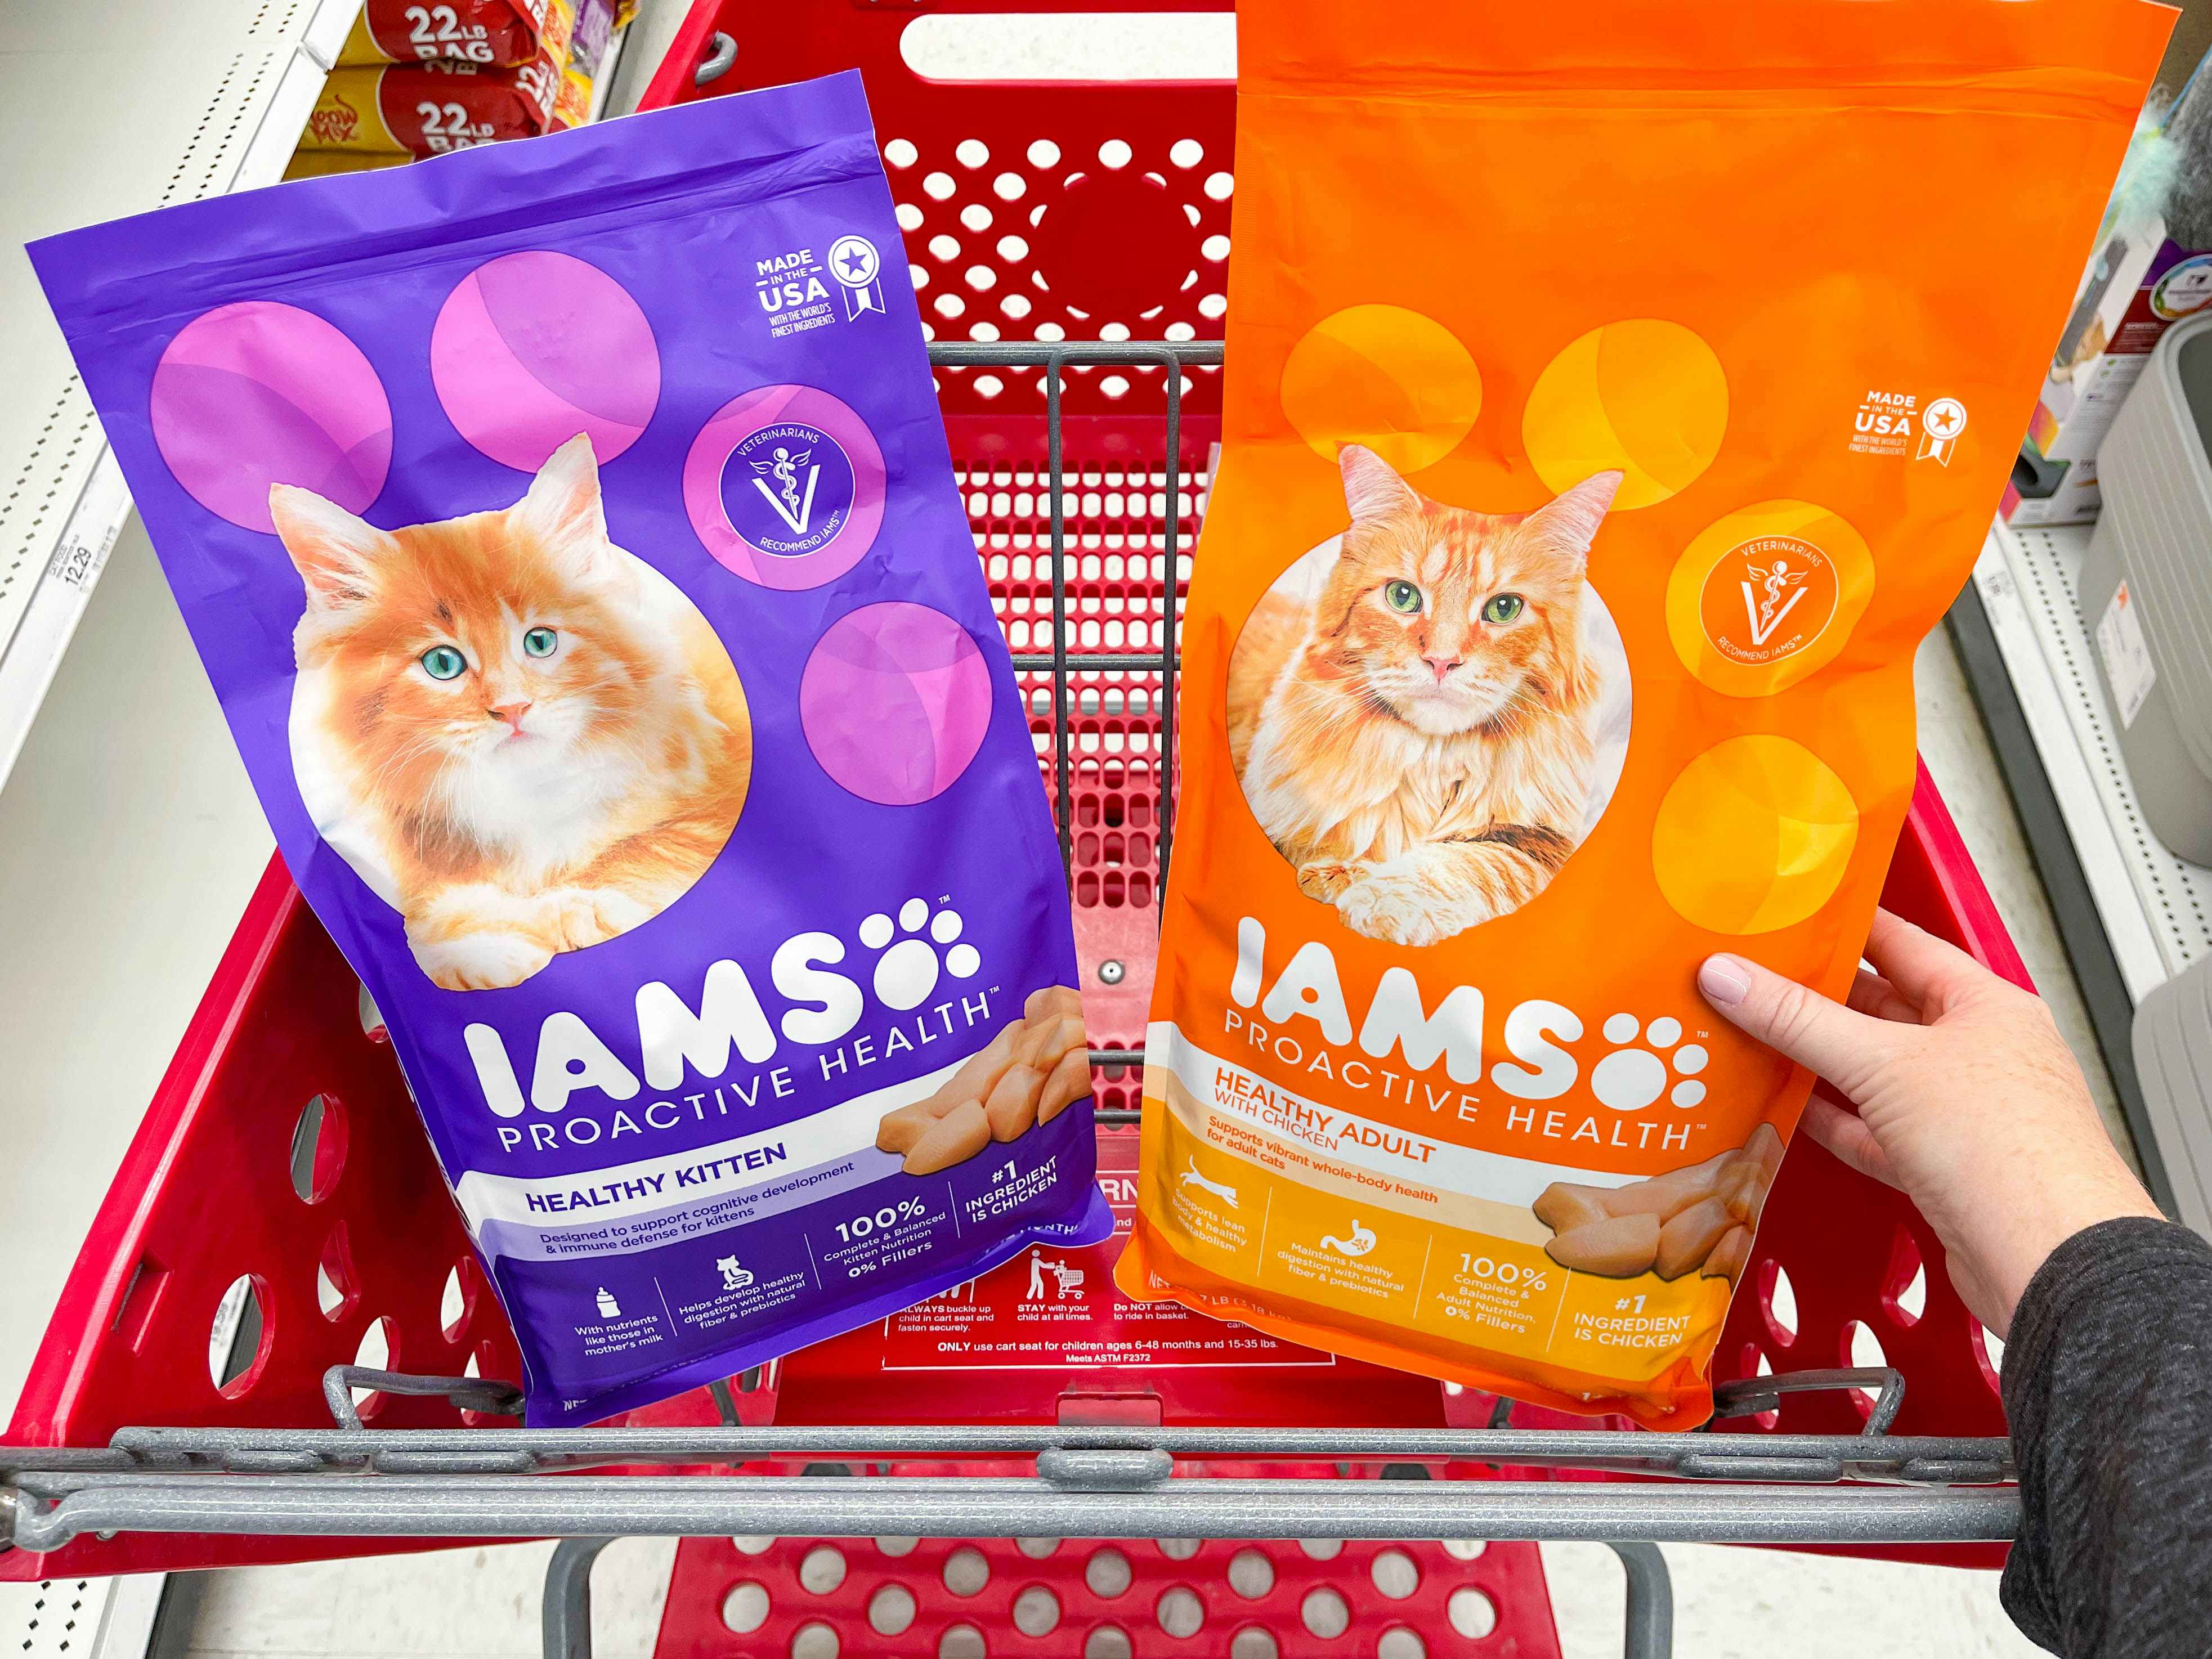 kitten and adult varieties of iams dry cat food in target cart